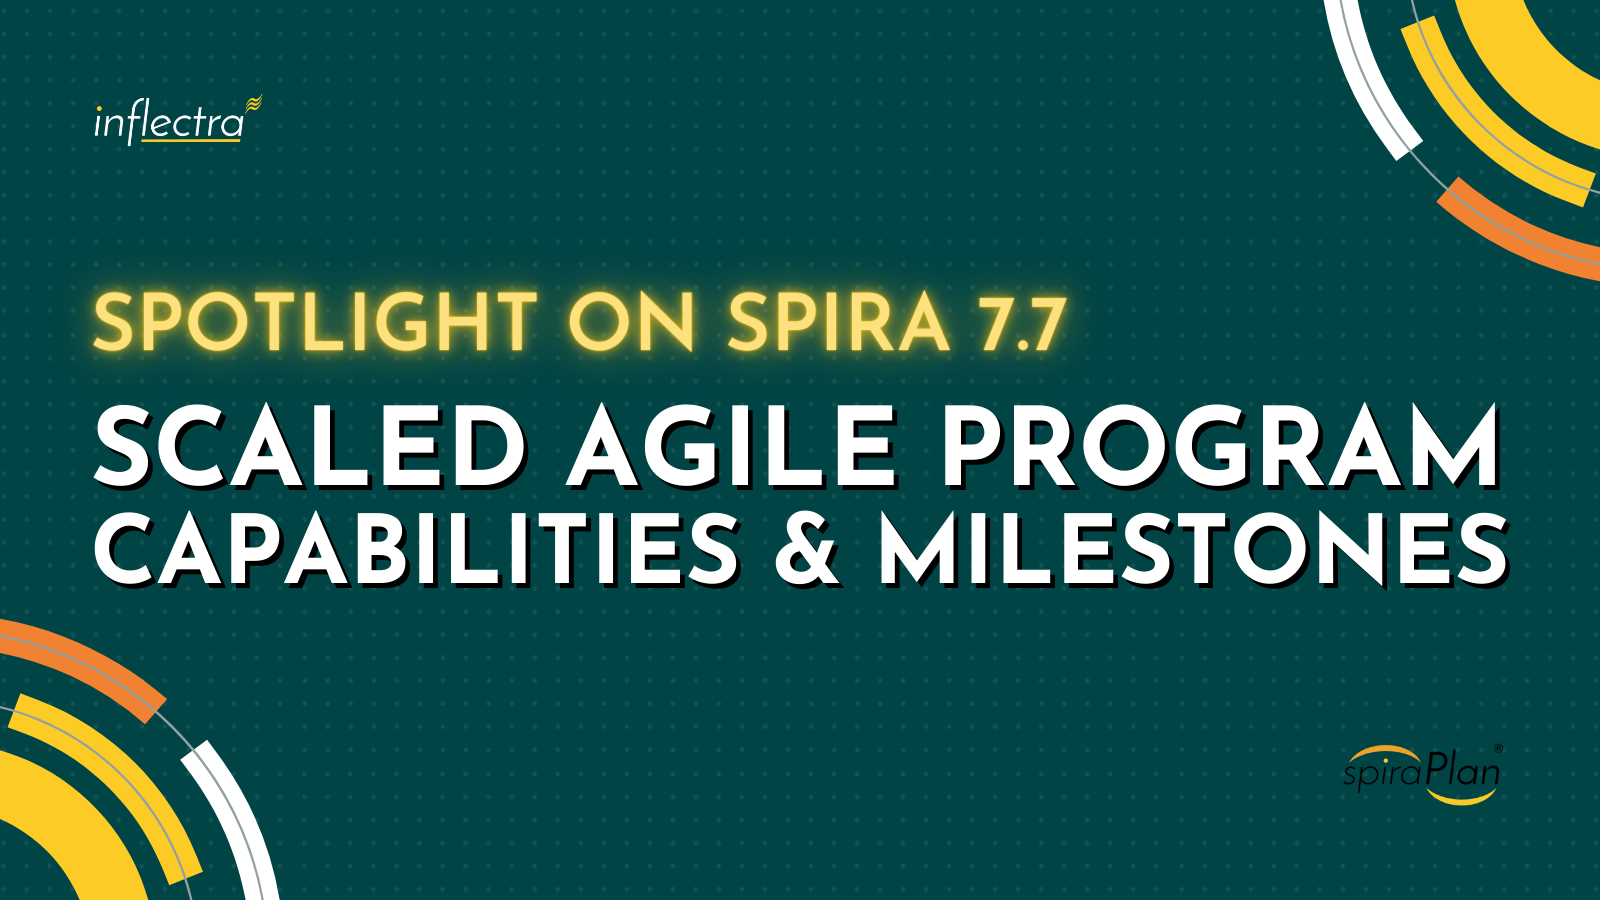 inflectra-spotlight-on-spira-scaled-agile-program-capabilities-and-milestones-blog-image